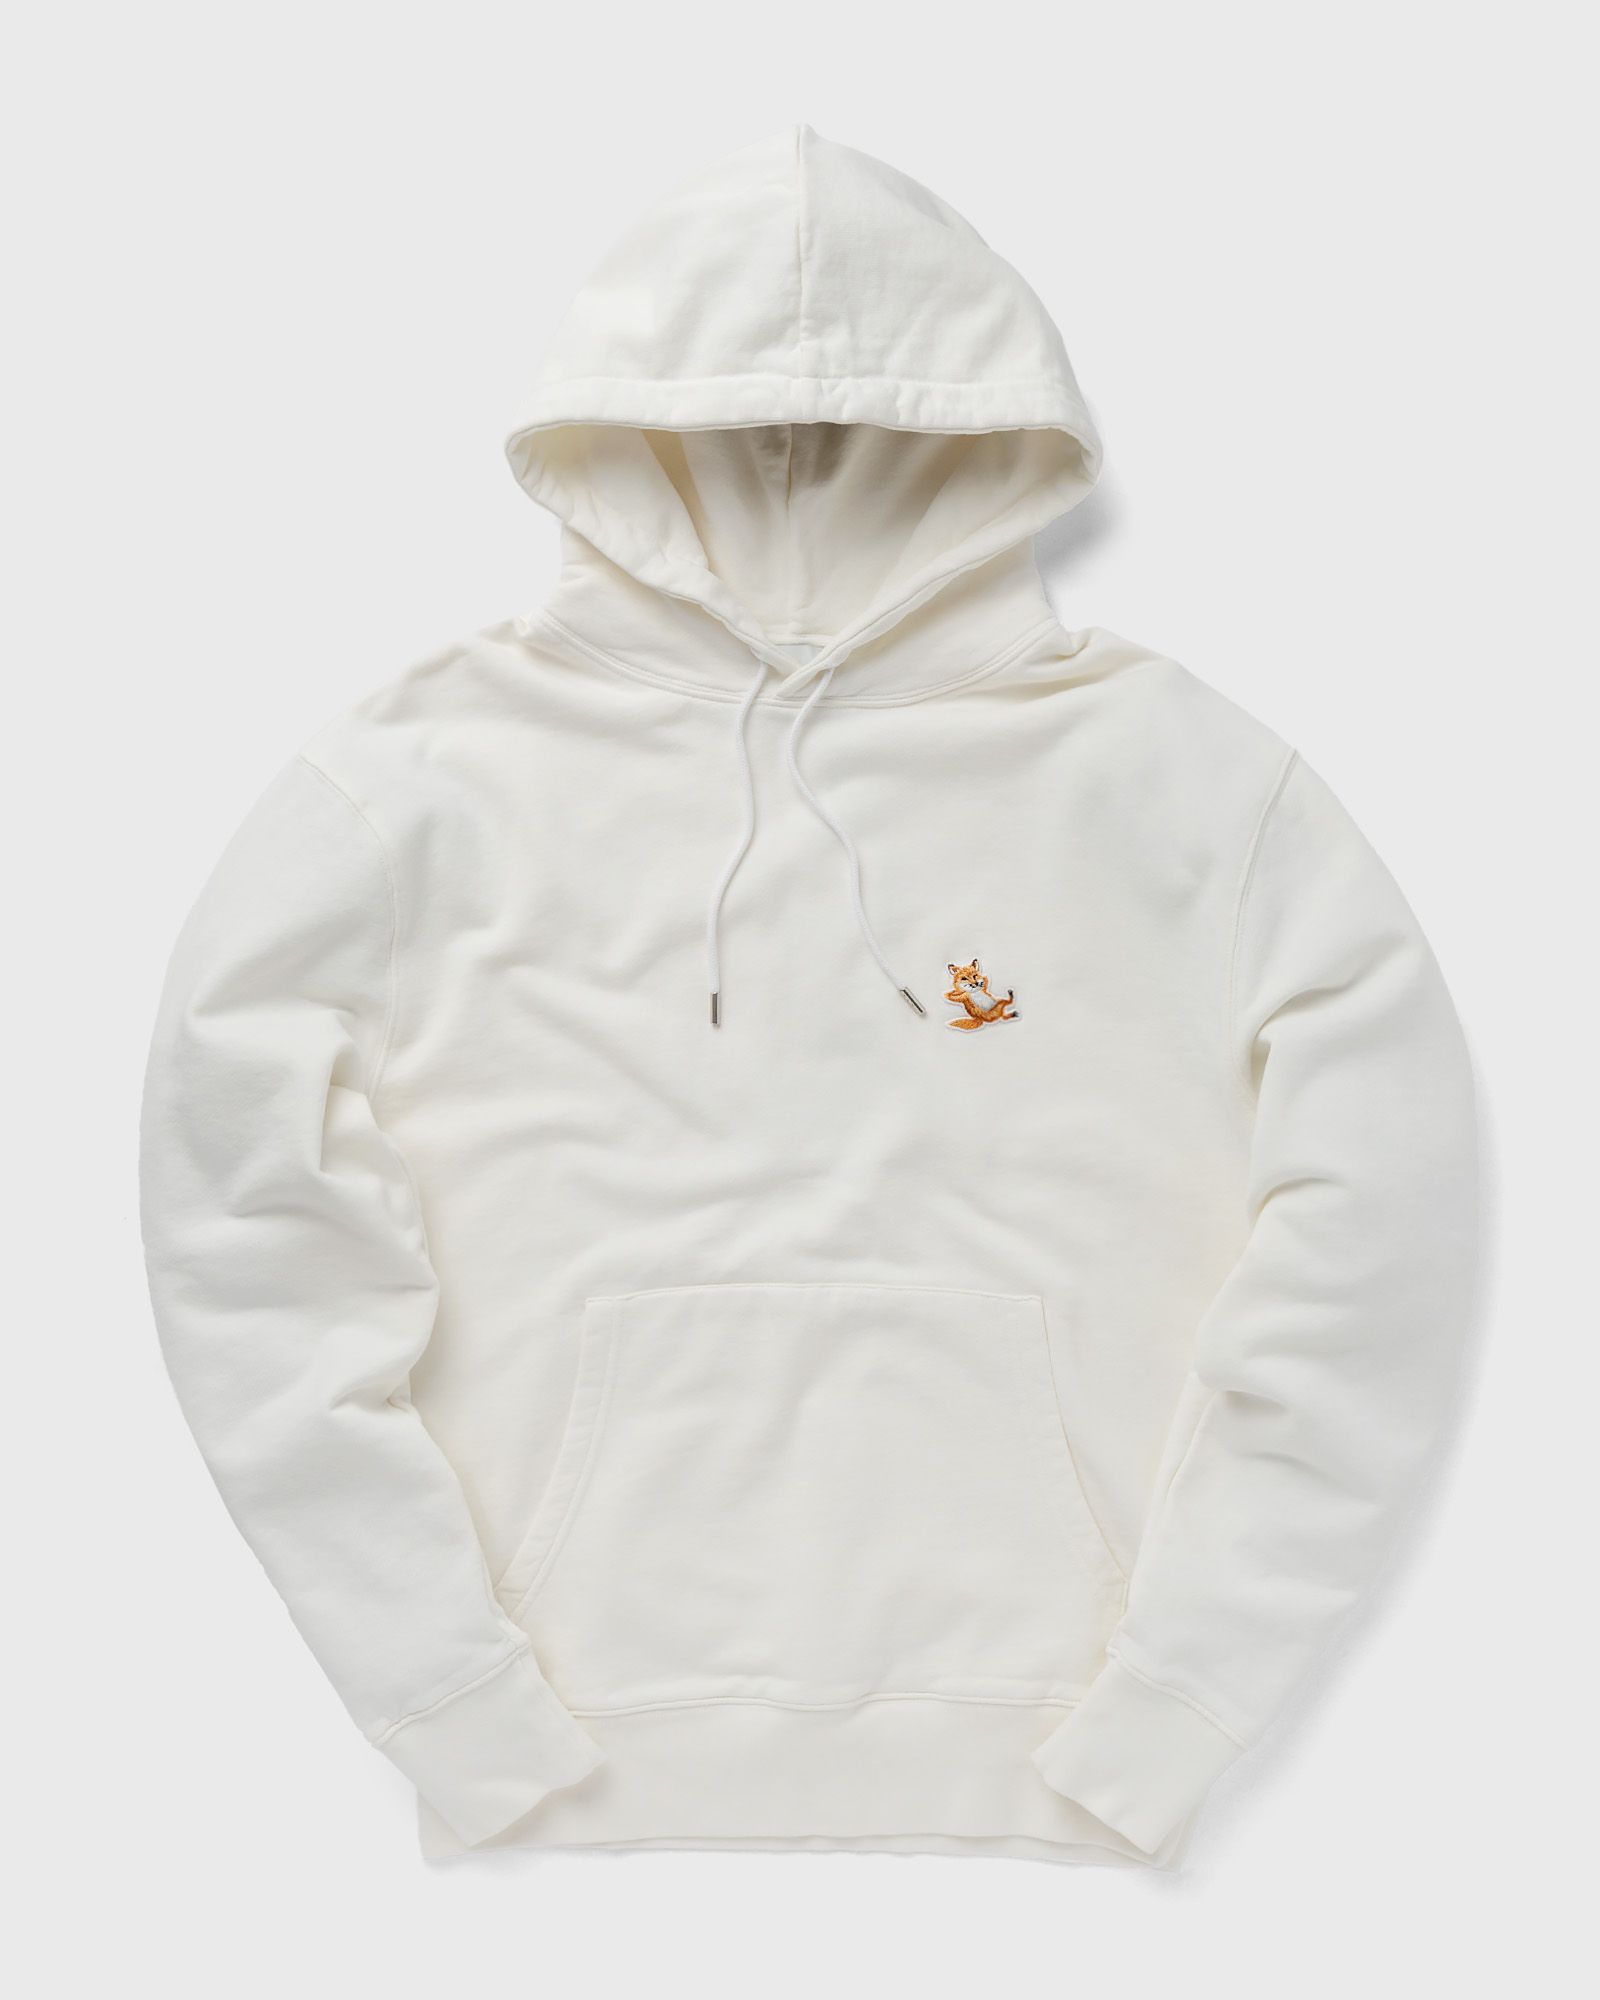 Maison Kitsune - chillax fox patch classic hoodie men hoodies white in größe:l